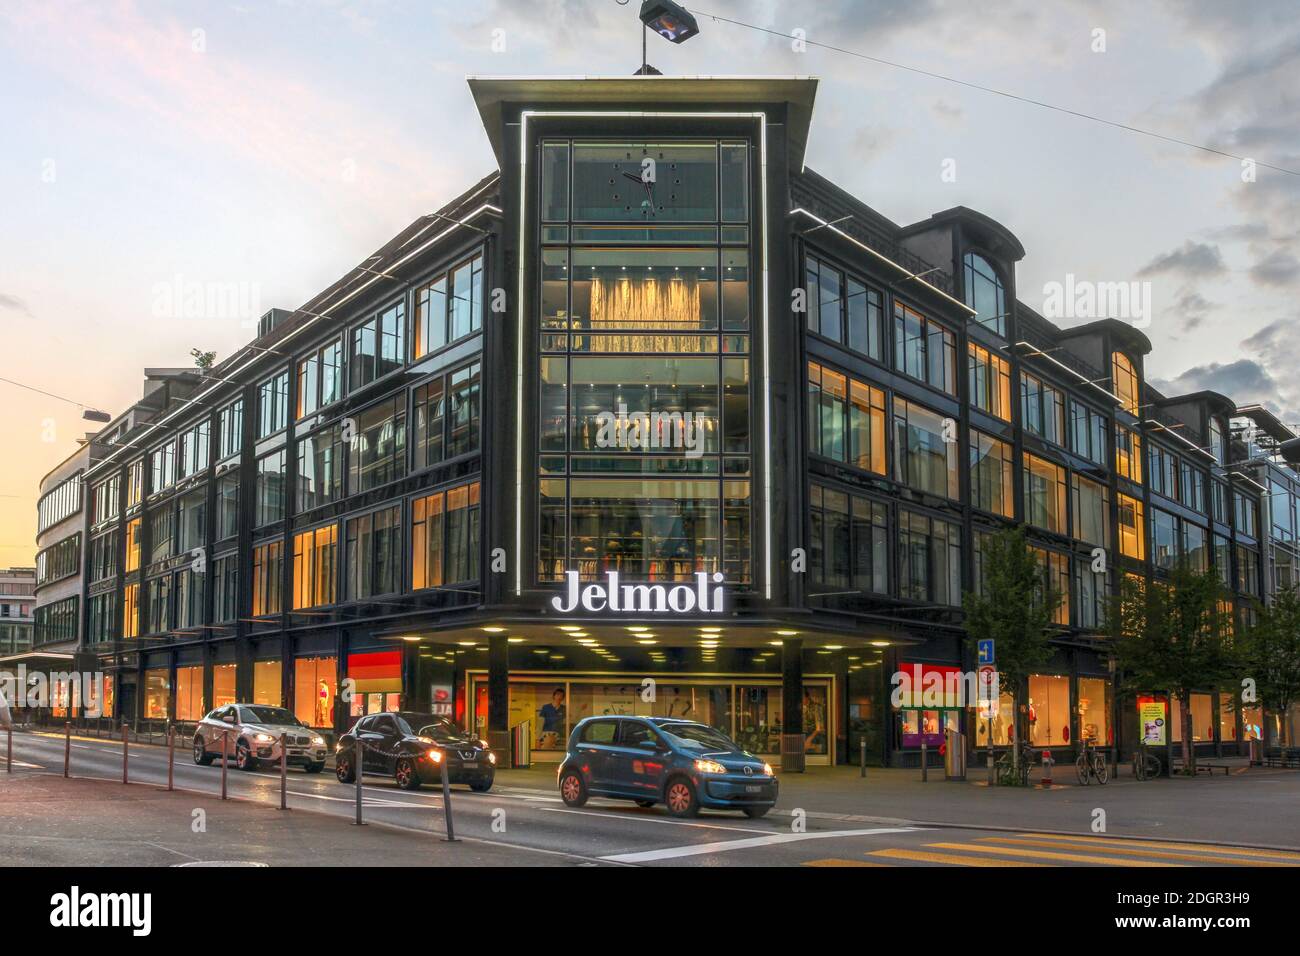 Zurich, Switzerland - June 26, 2020 - One of the oldest and best known in the world department stores, Jelimoli in Zurich downtown, Switzerland, it's Stock Photo